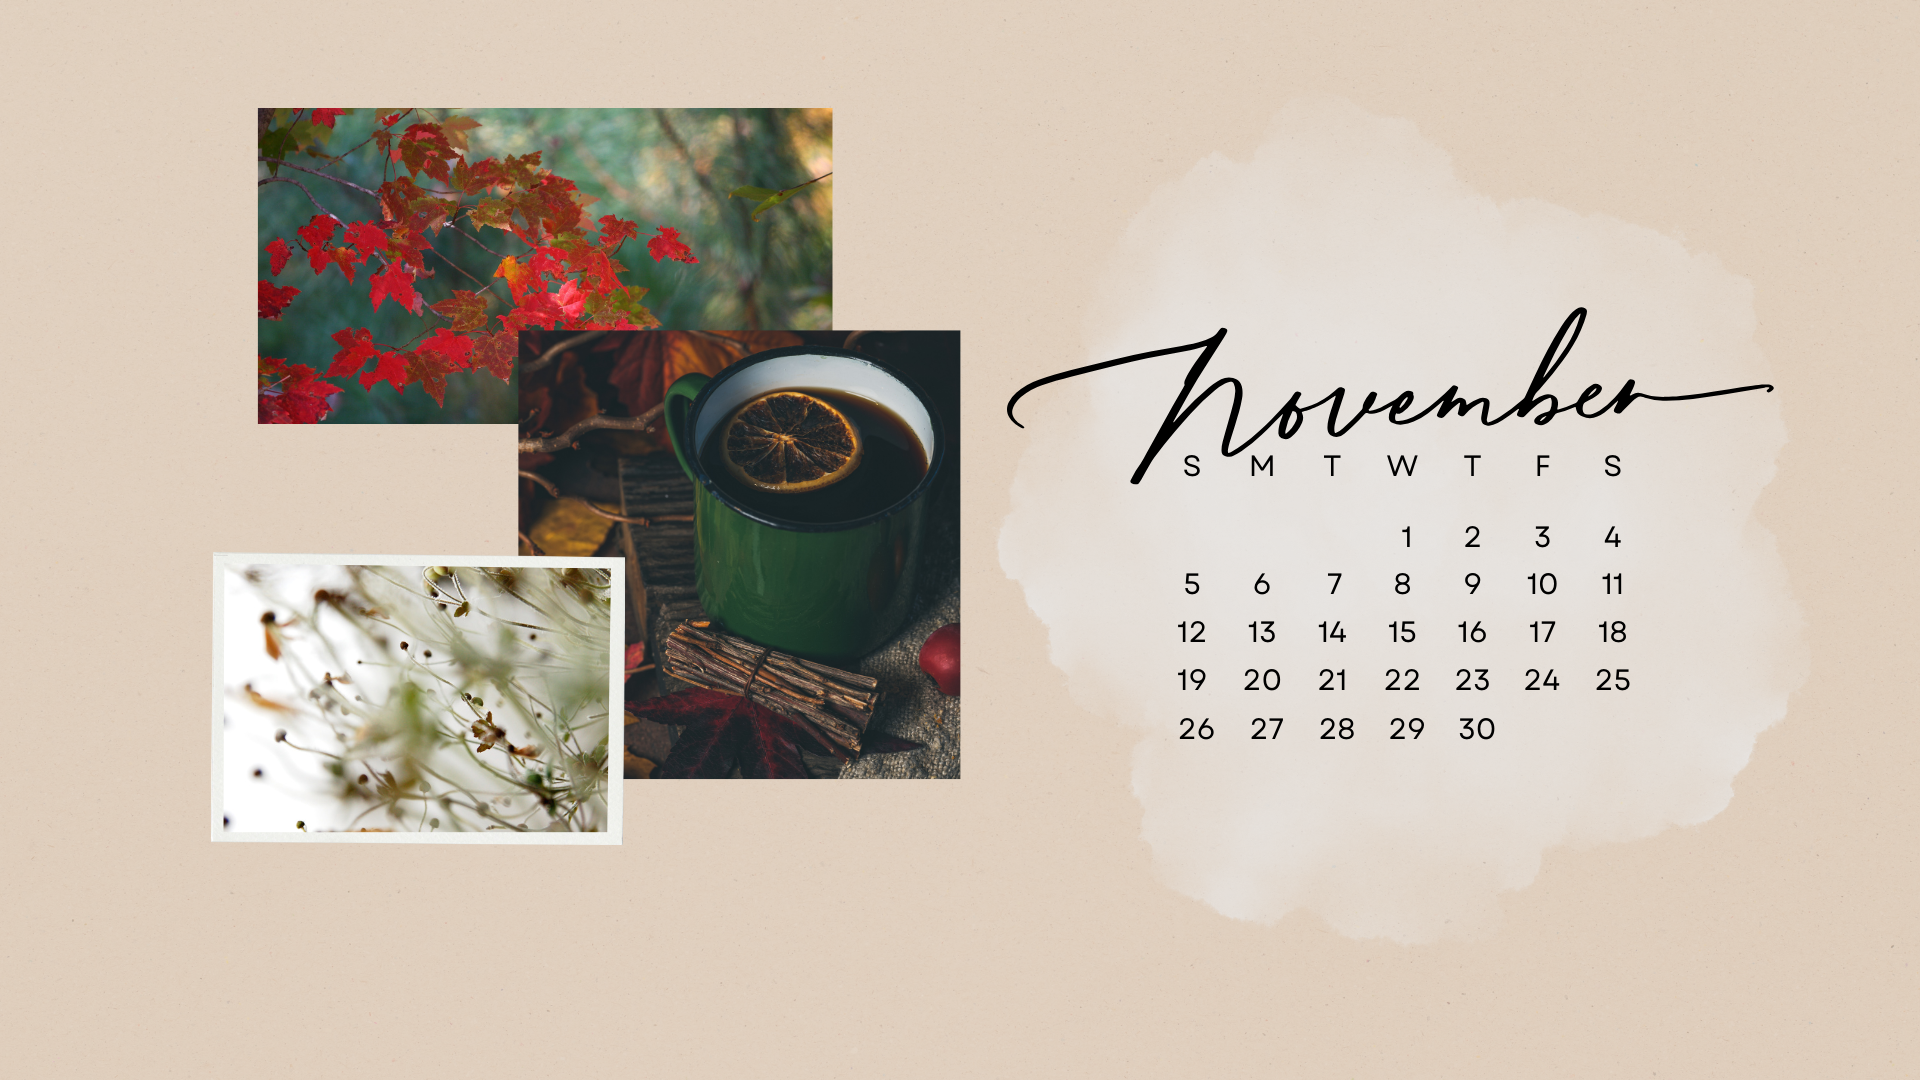 November 2023 wallpapers – 45 FREEBIES for desktop & phones!